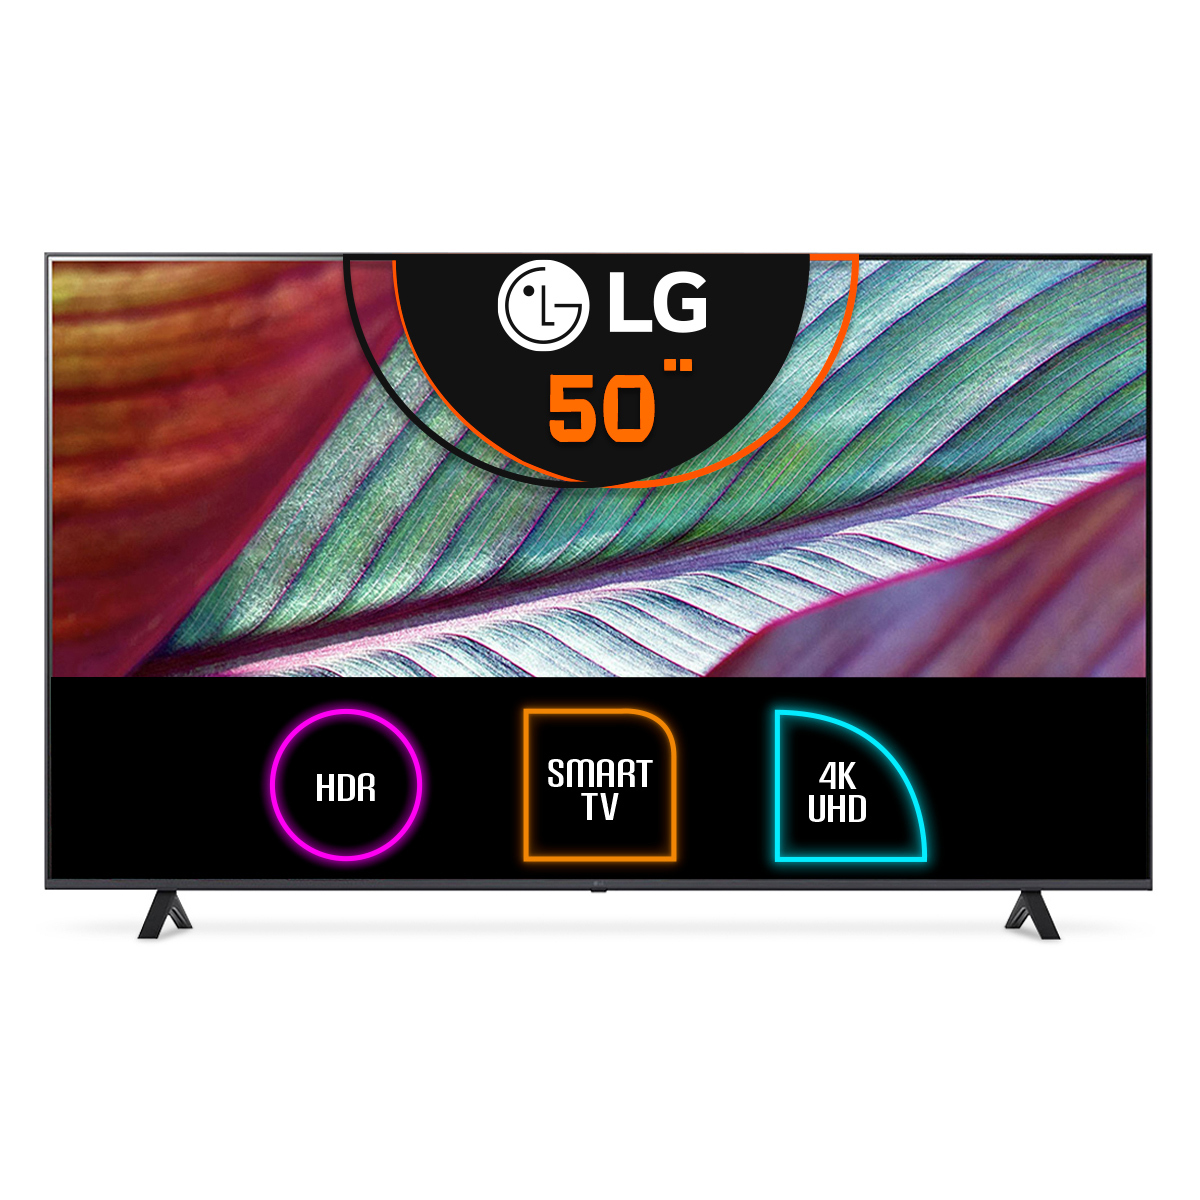 Pantalla LG Smart TV 50UR7800PSB 50 pulg. AI ThinQ 4K UHD, Pantallas, Pantallas, Audio y video, Todas, Categoría